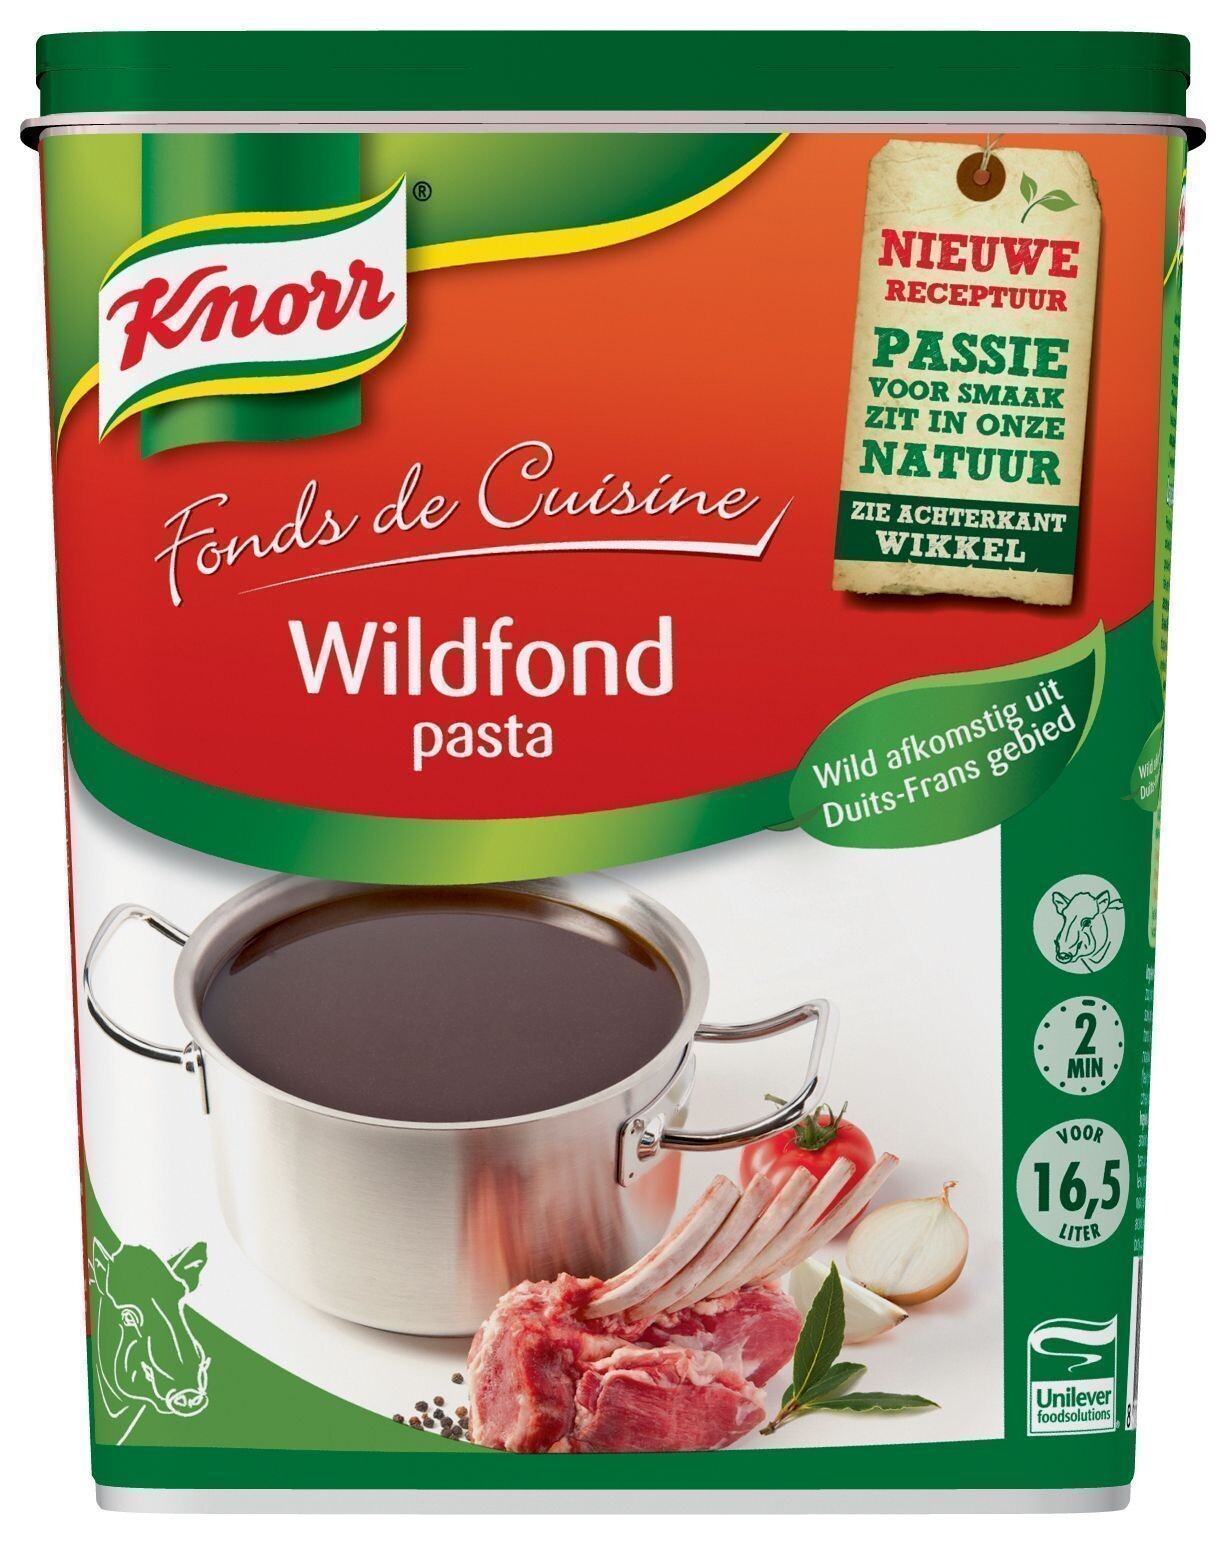 Knorr wild fond pasta 1kg Fonds de Cuisine